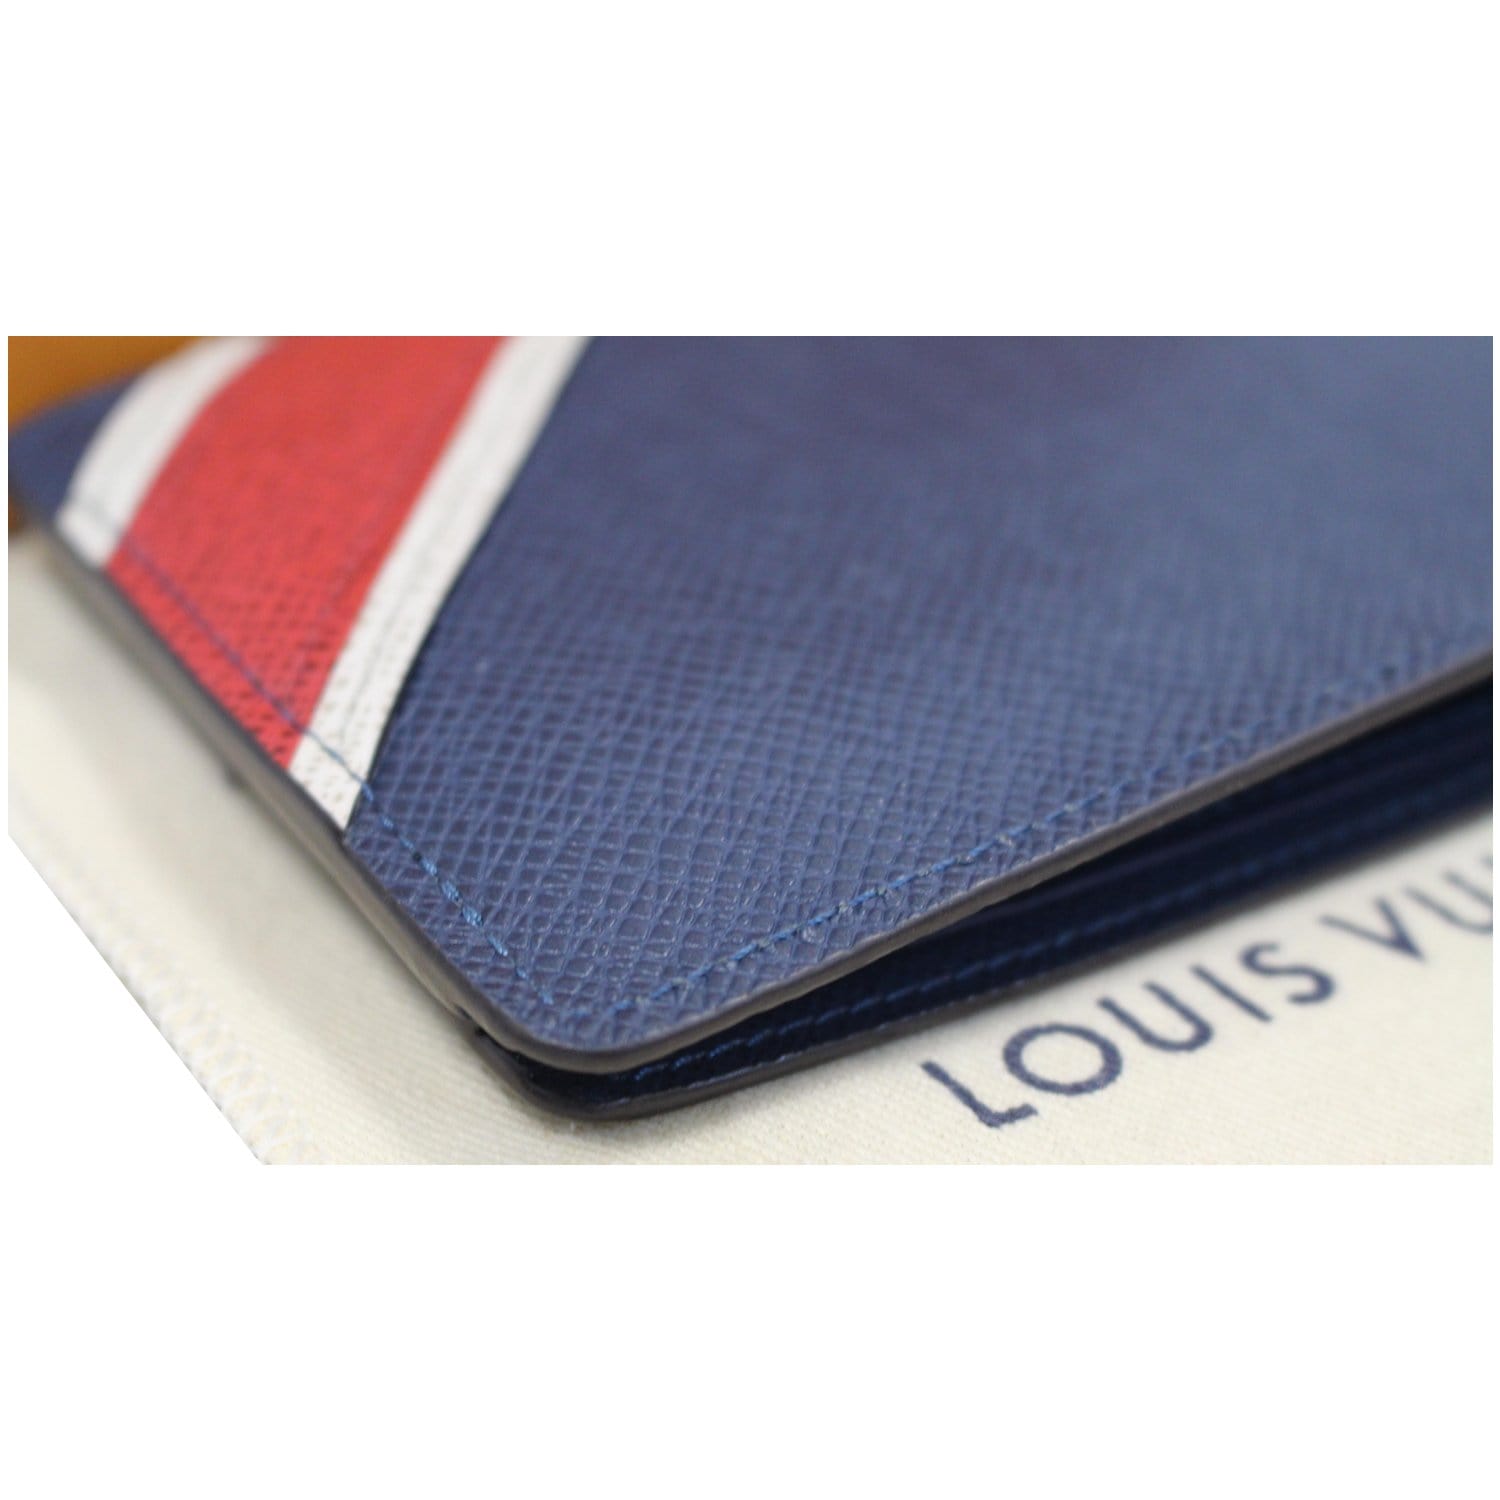 Louis Vuitton Multiple Wallet (3 Card Slot) Taiga Black